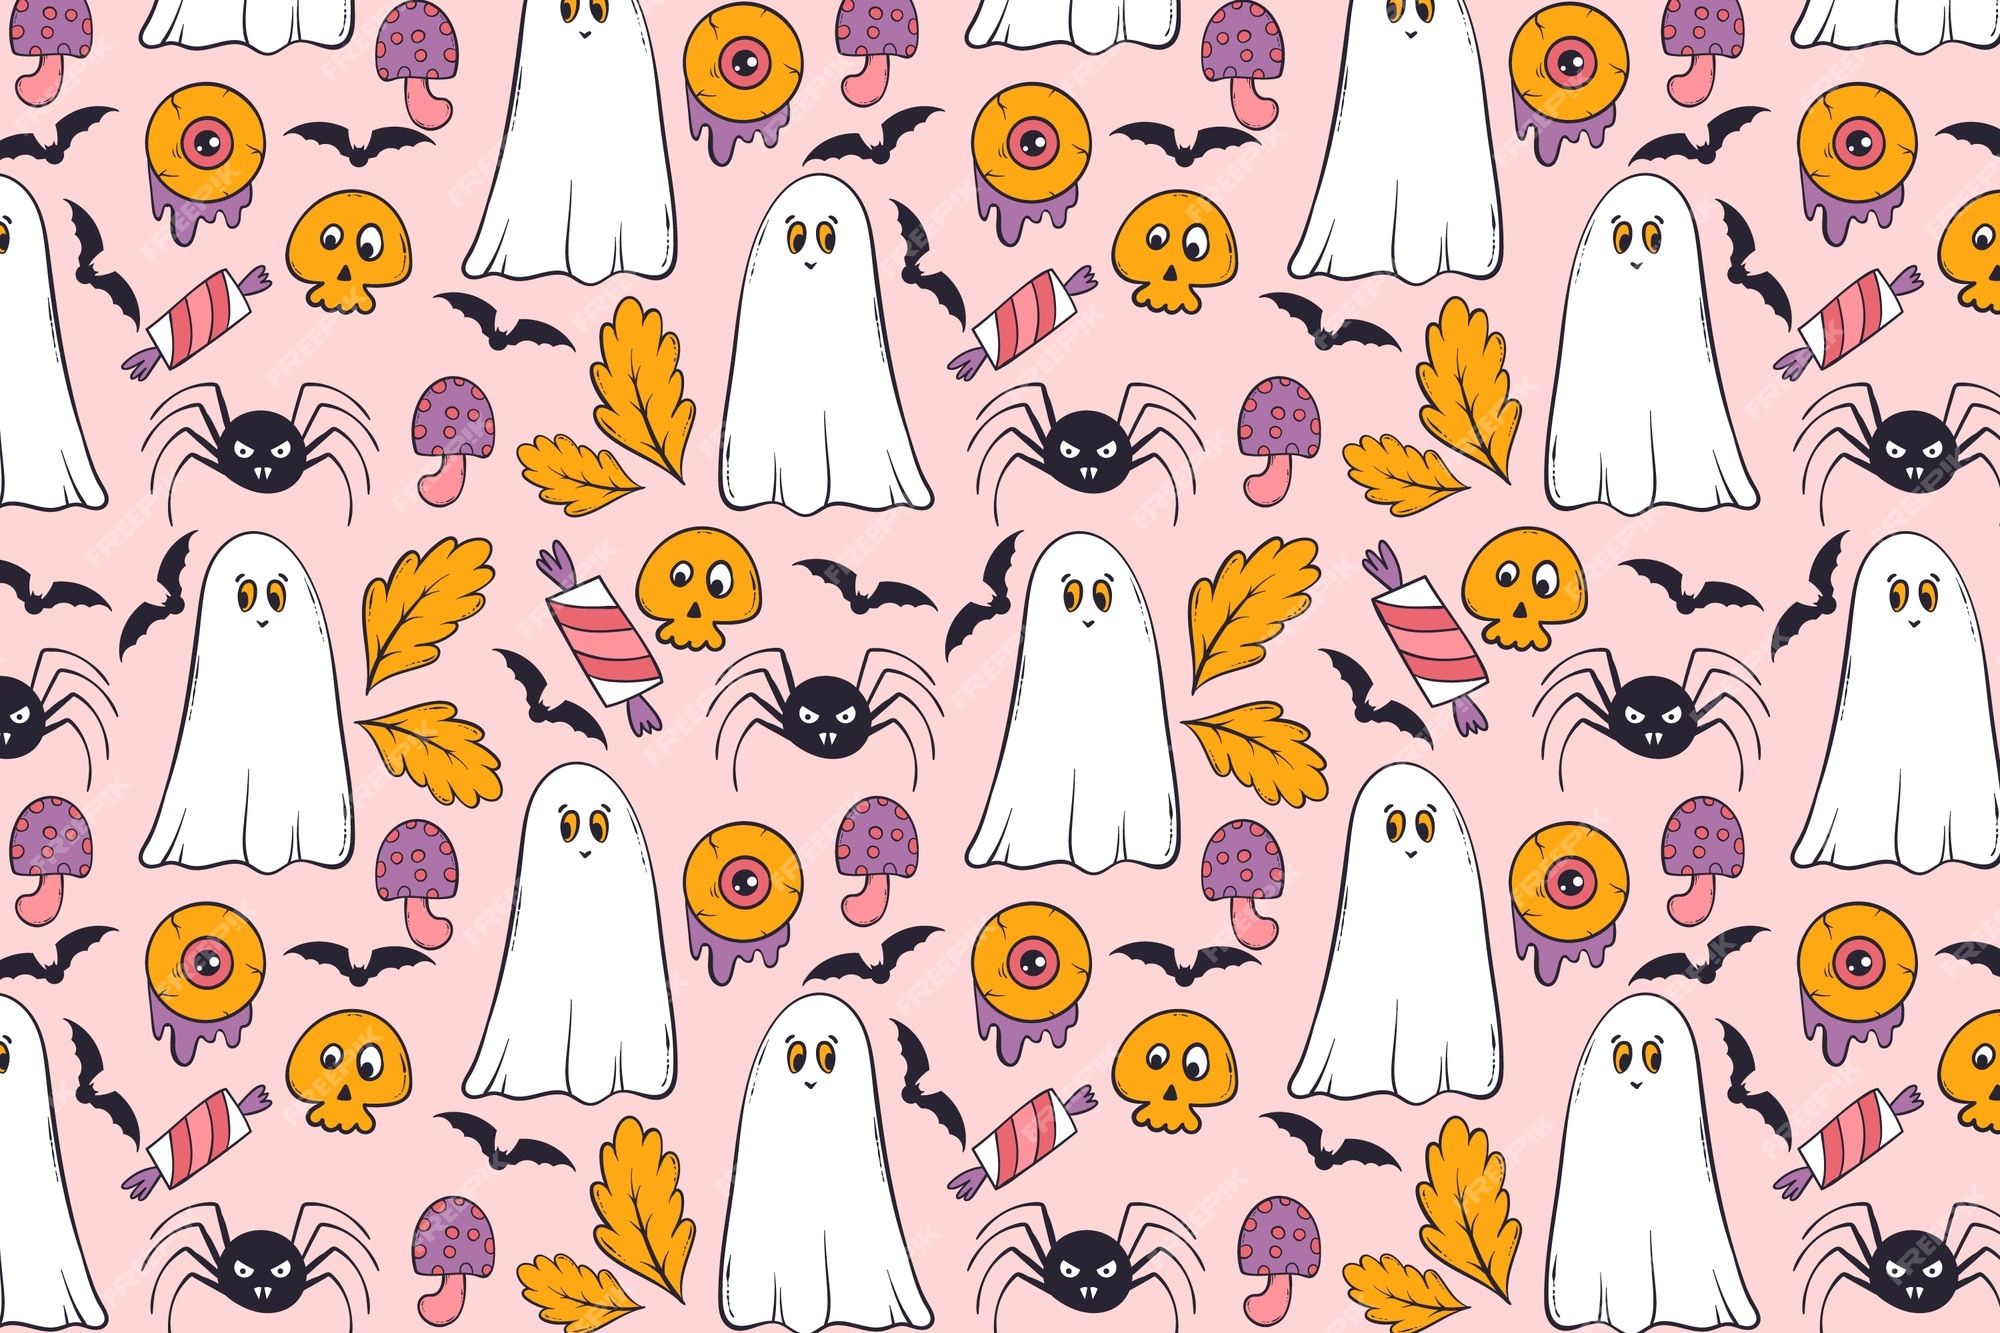 Aesthetic Halloween Wallpaper Image